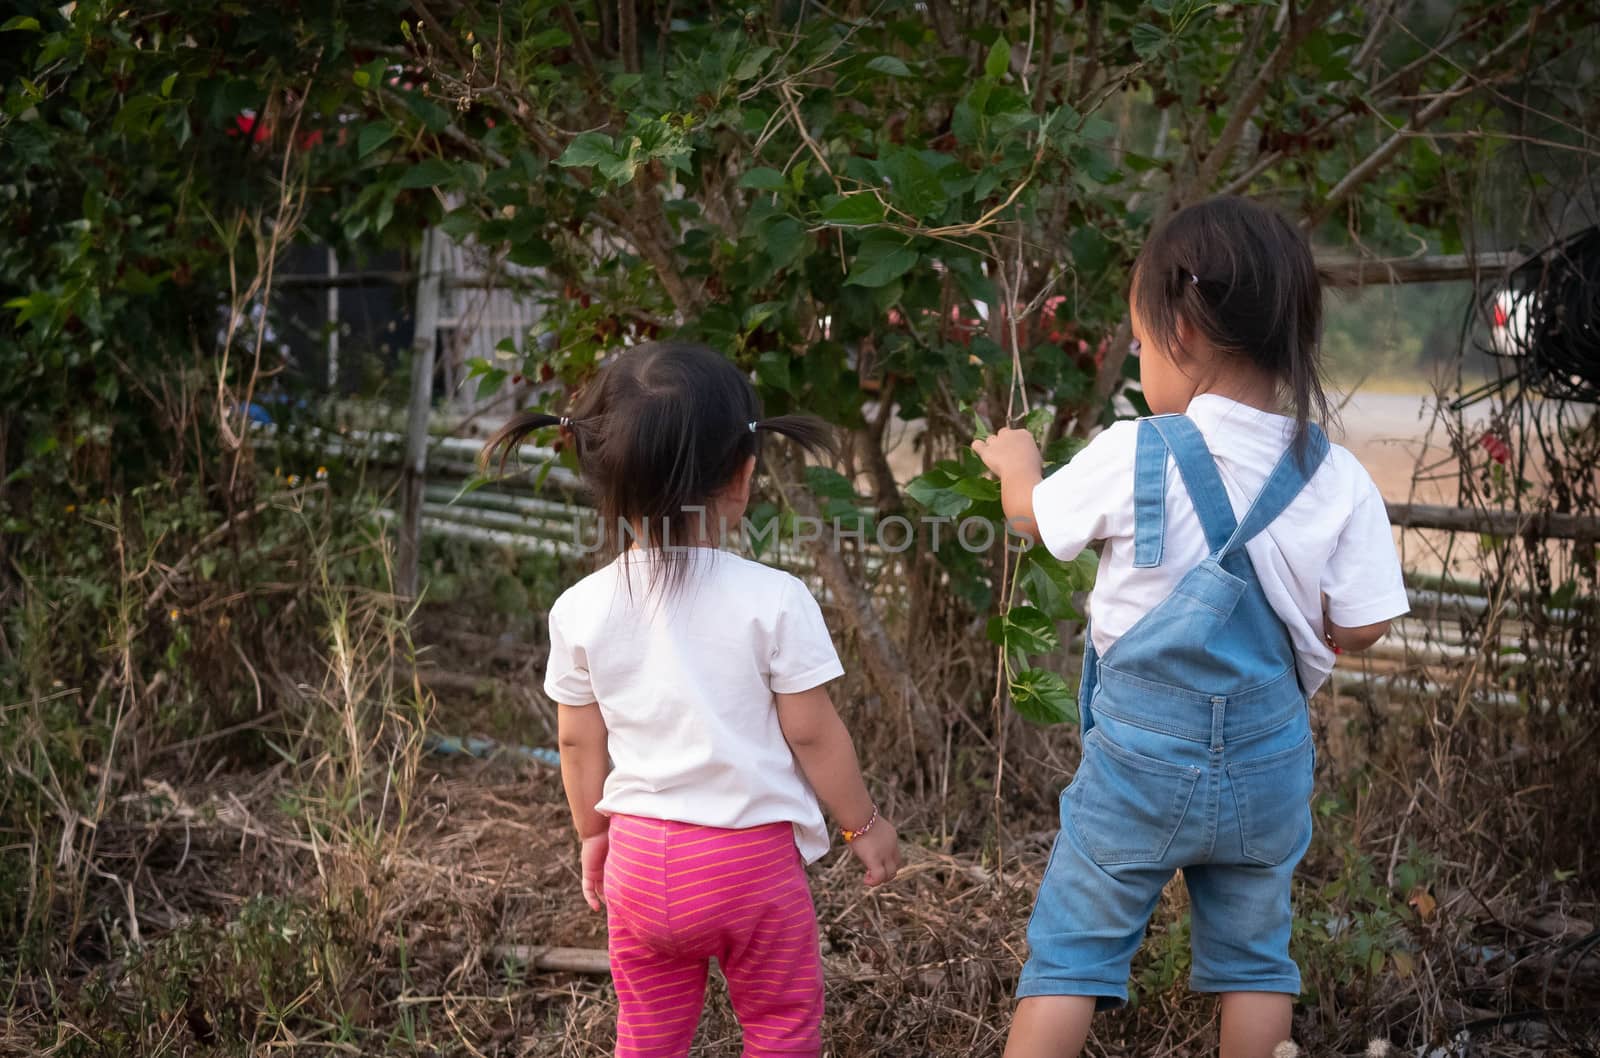 Asian little child girl walking in the garden with cluttered grass. Dangerous in children.